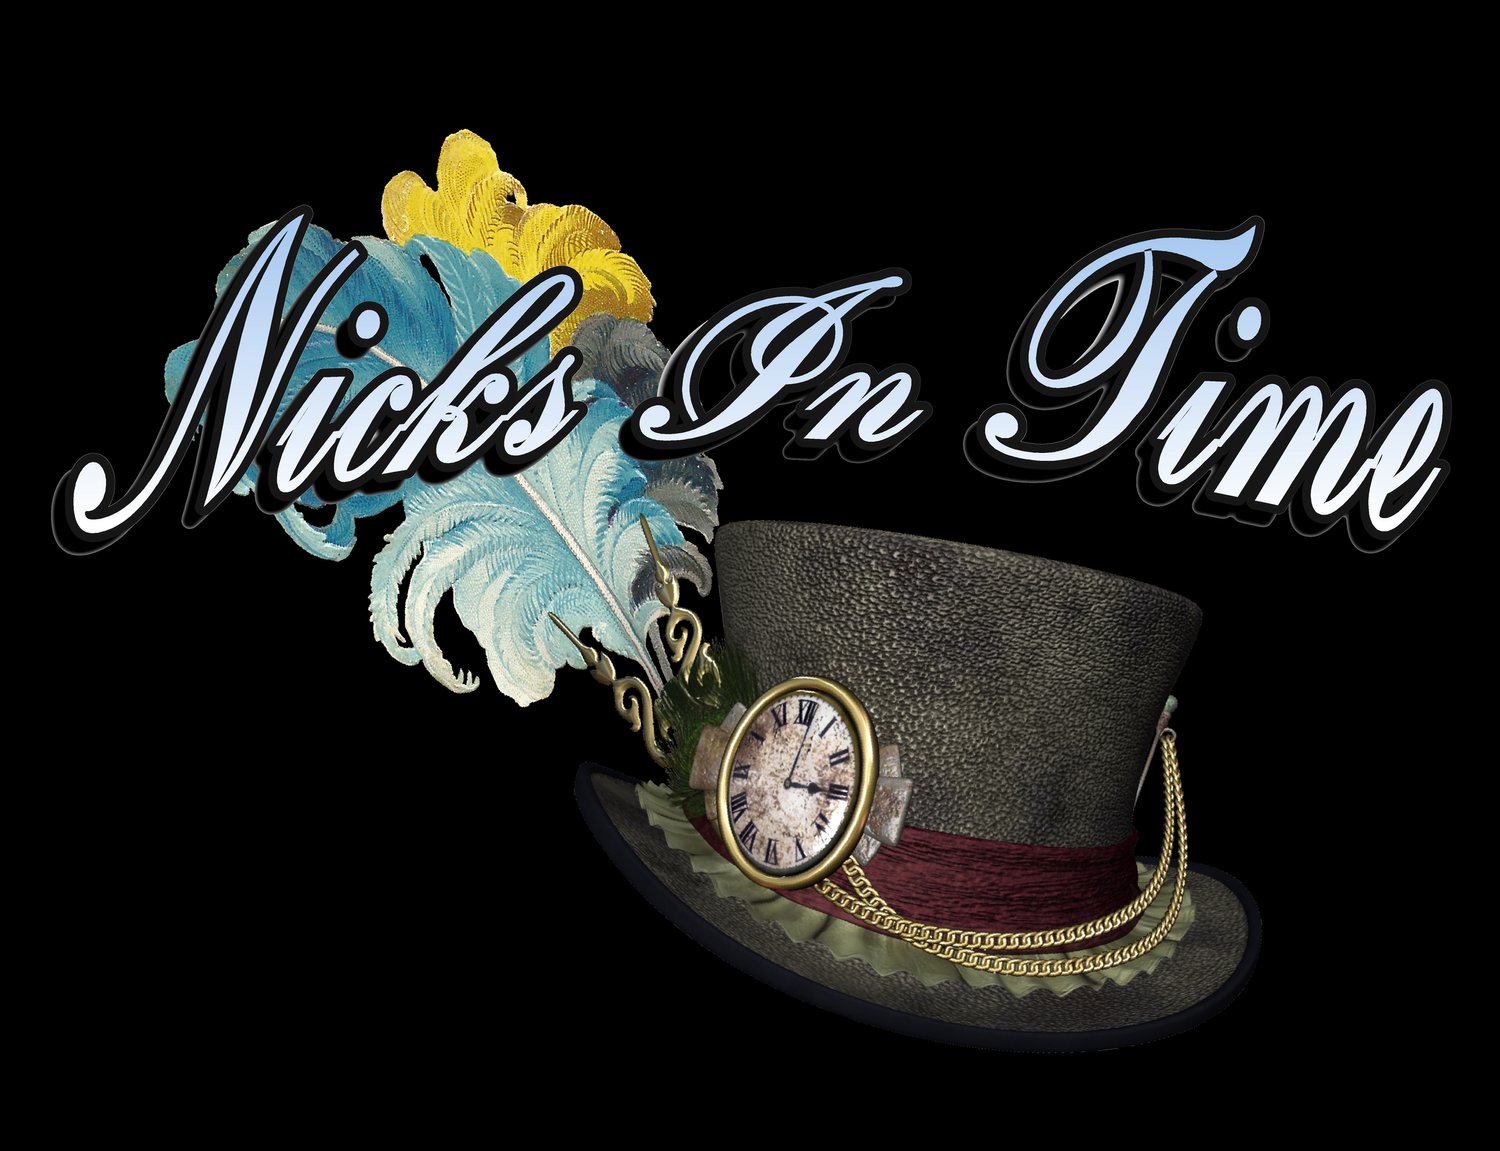 Nicks In Time - the Premier Stevie Nicks Tribute Band